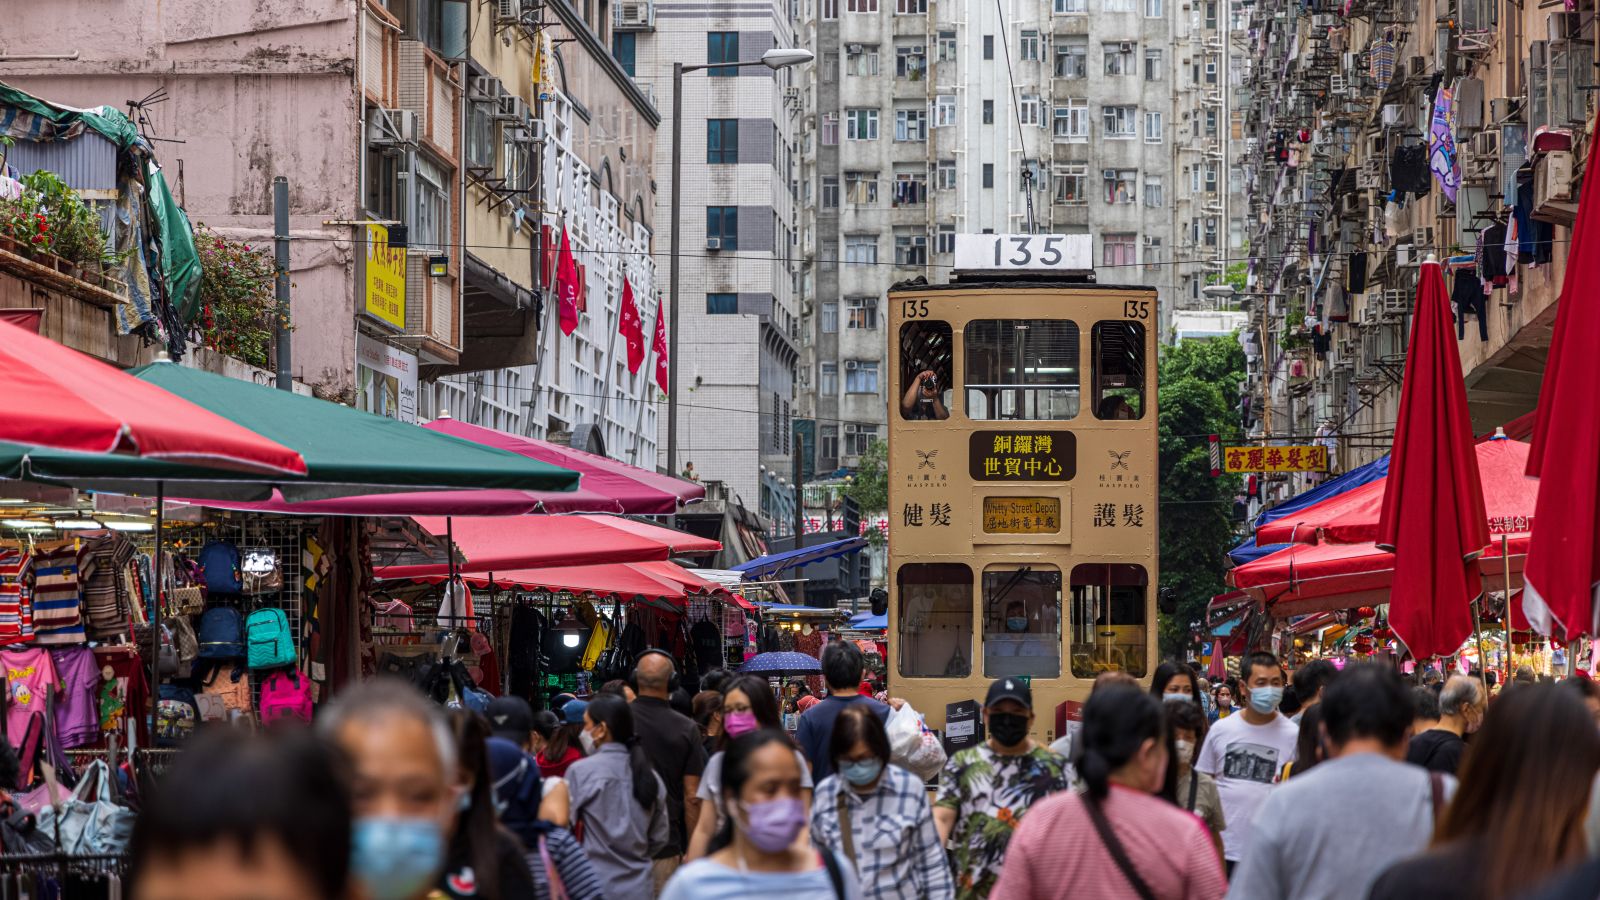 The tram market in Hong Kong